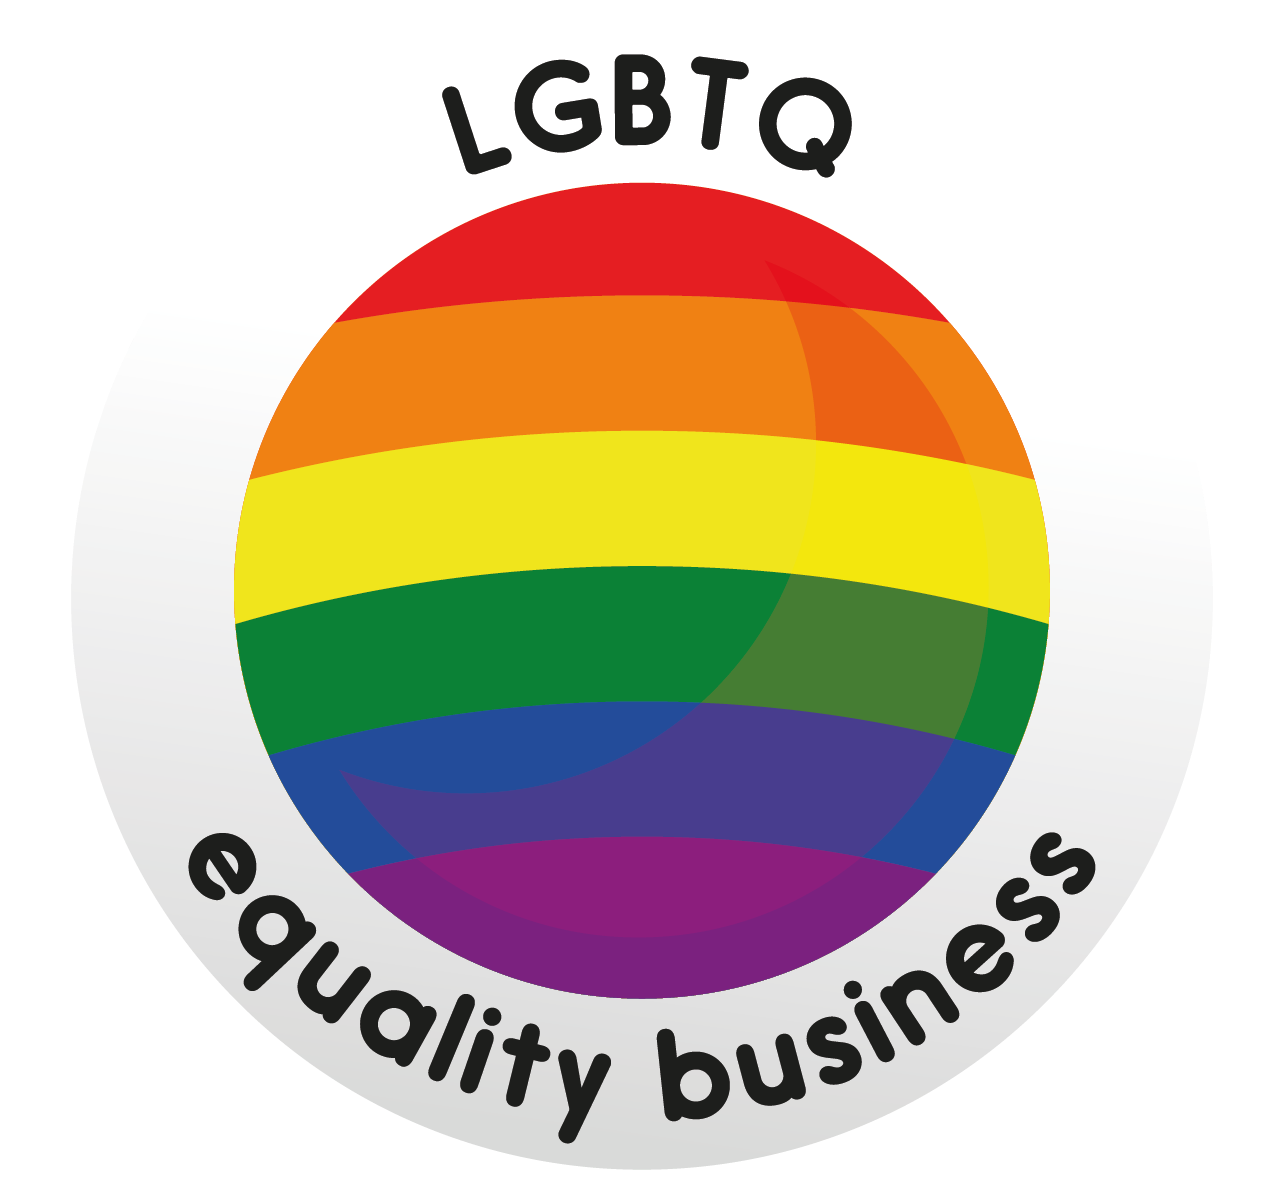 LGBTQ Equality Business